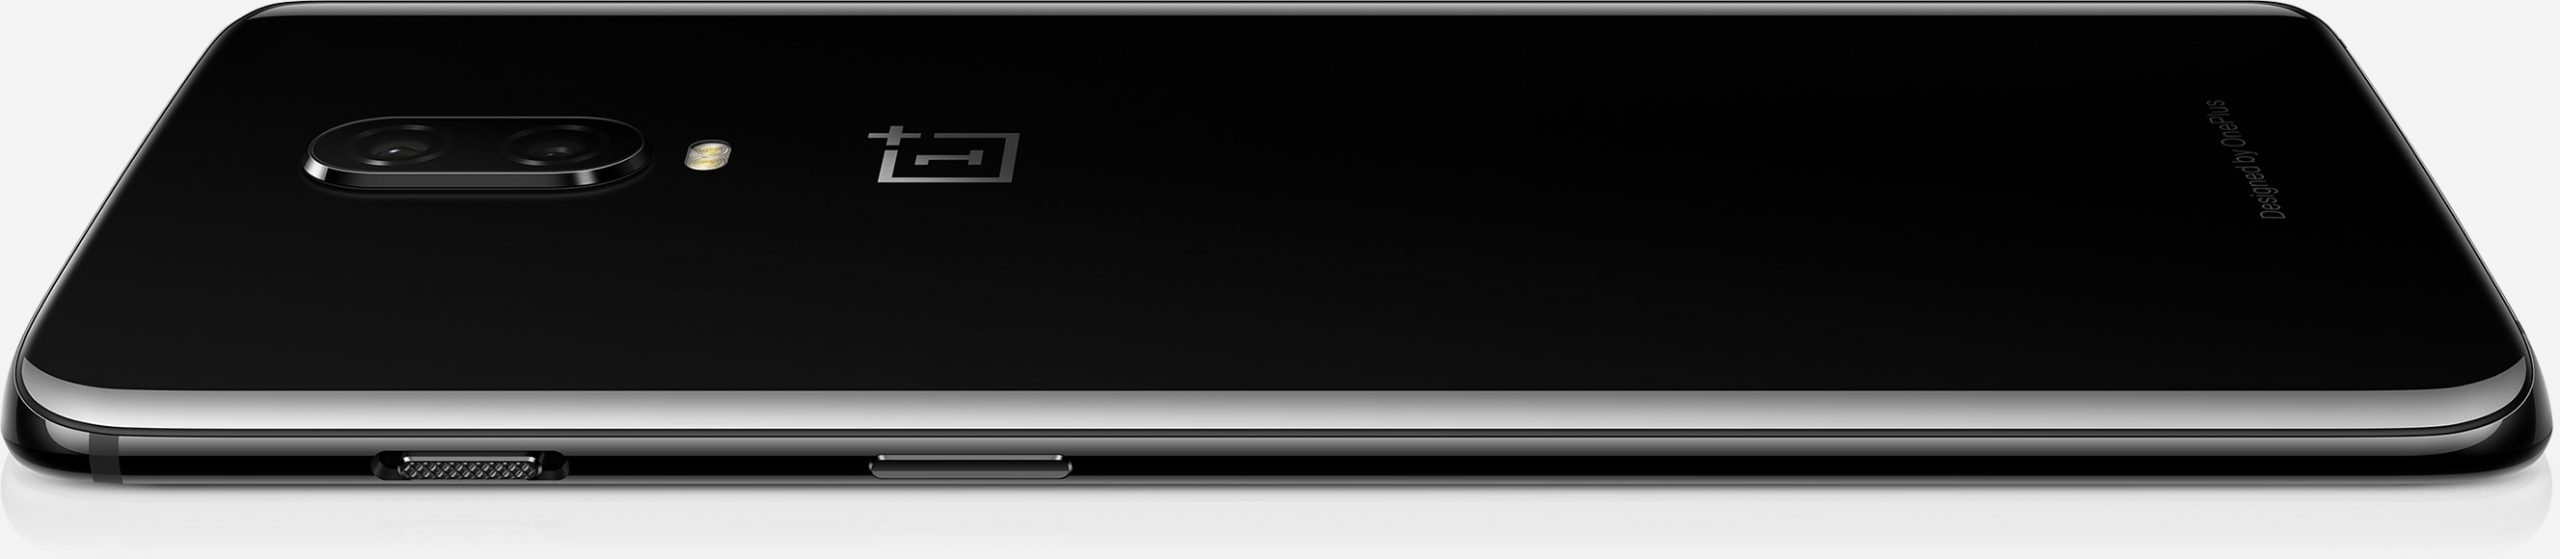 OnePlus 6T FLat